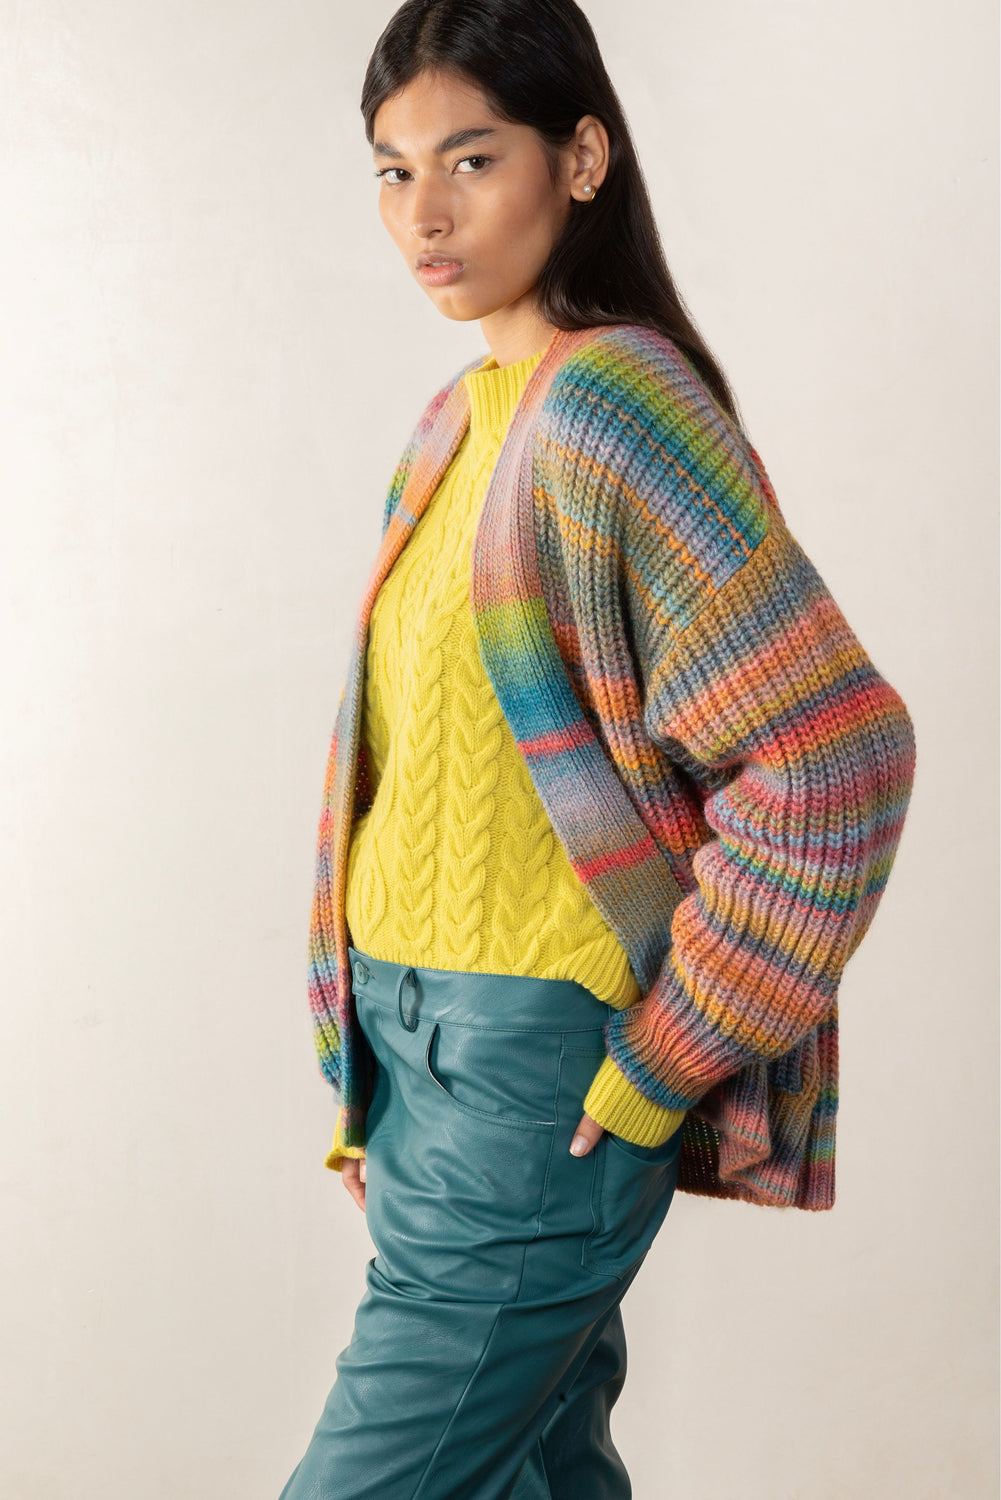 Sweater Weili Zheng